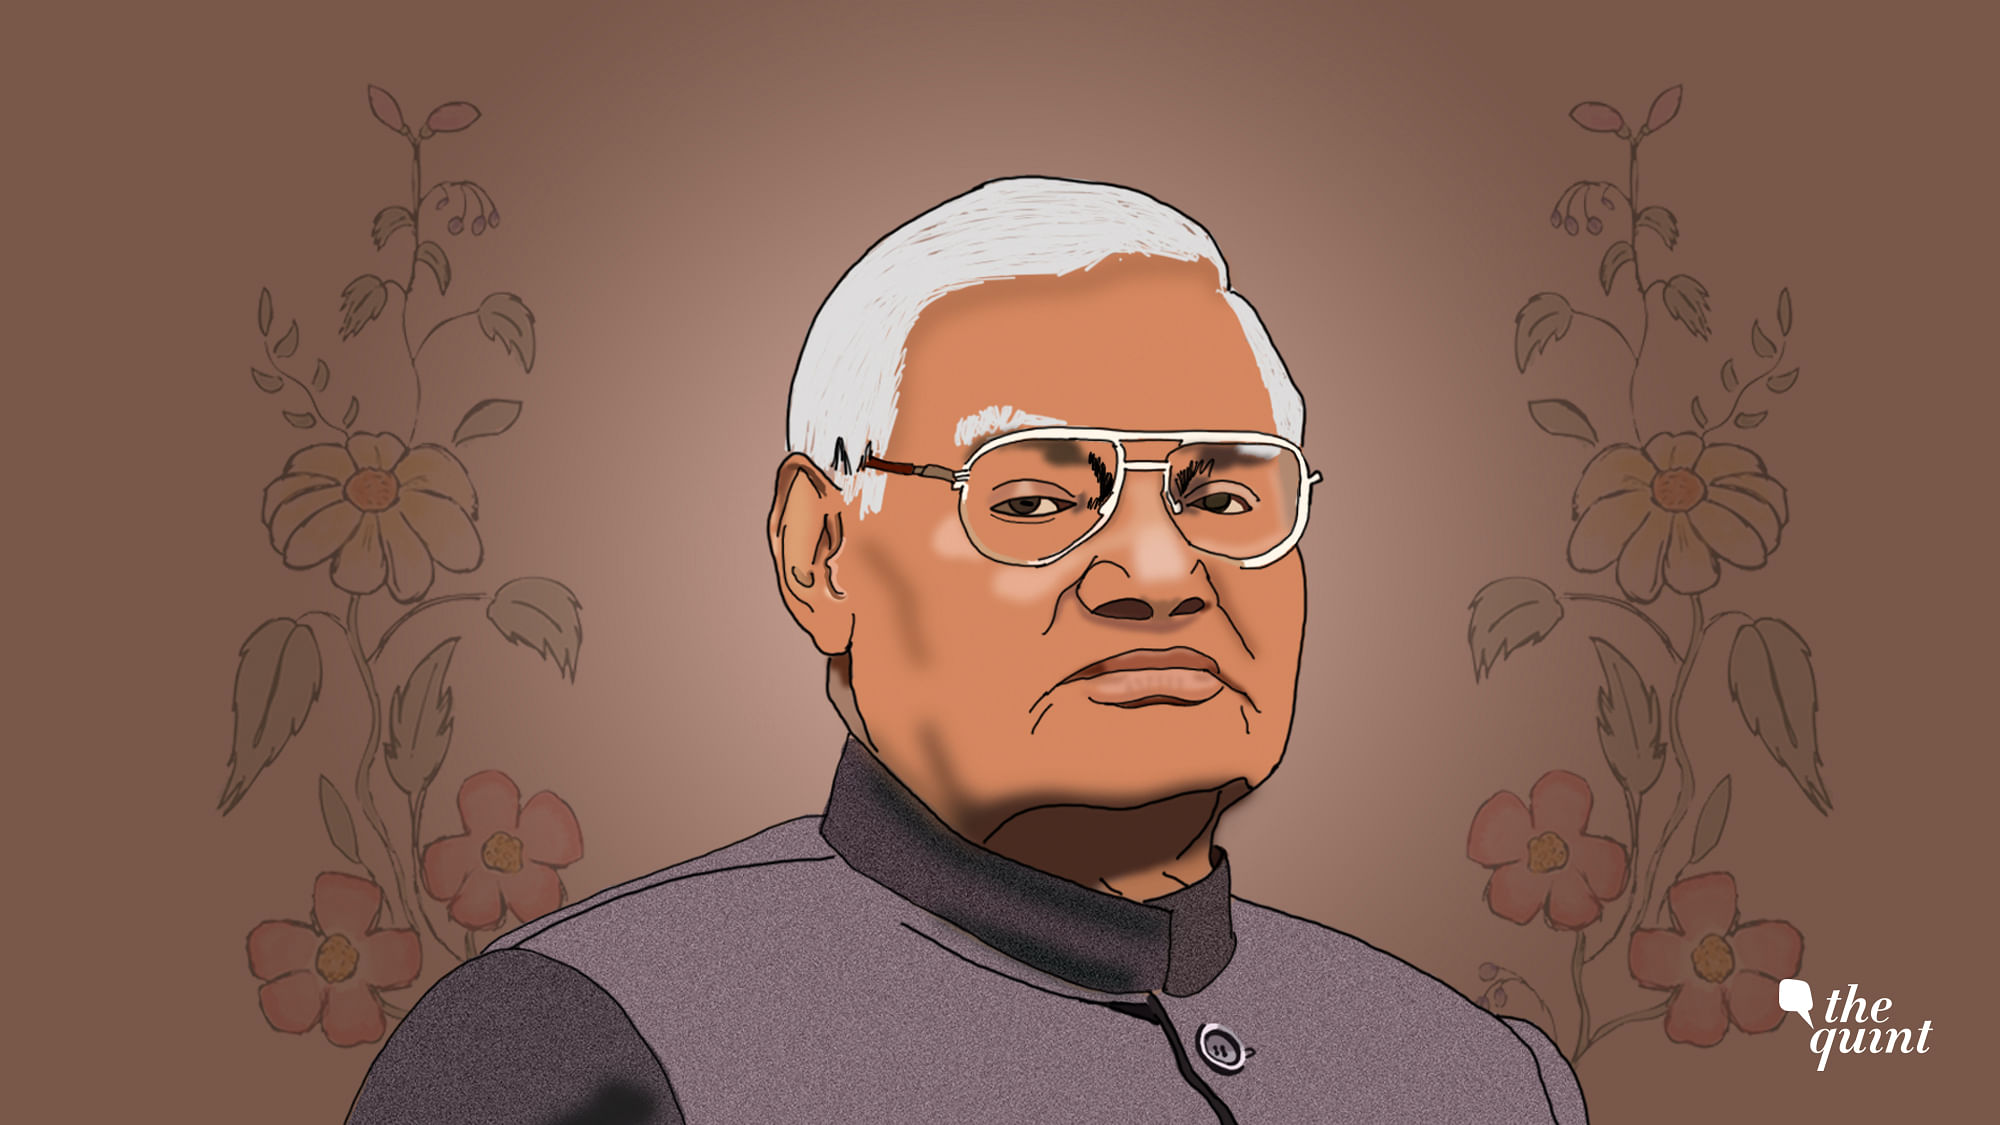 Former Prime Minister Atal Bihari Vajpayee passed away on 16 August, 2018.